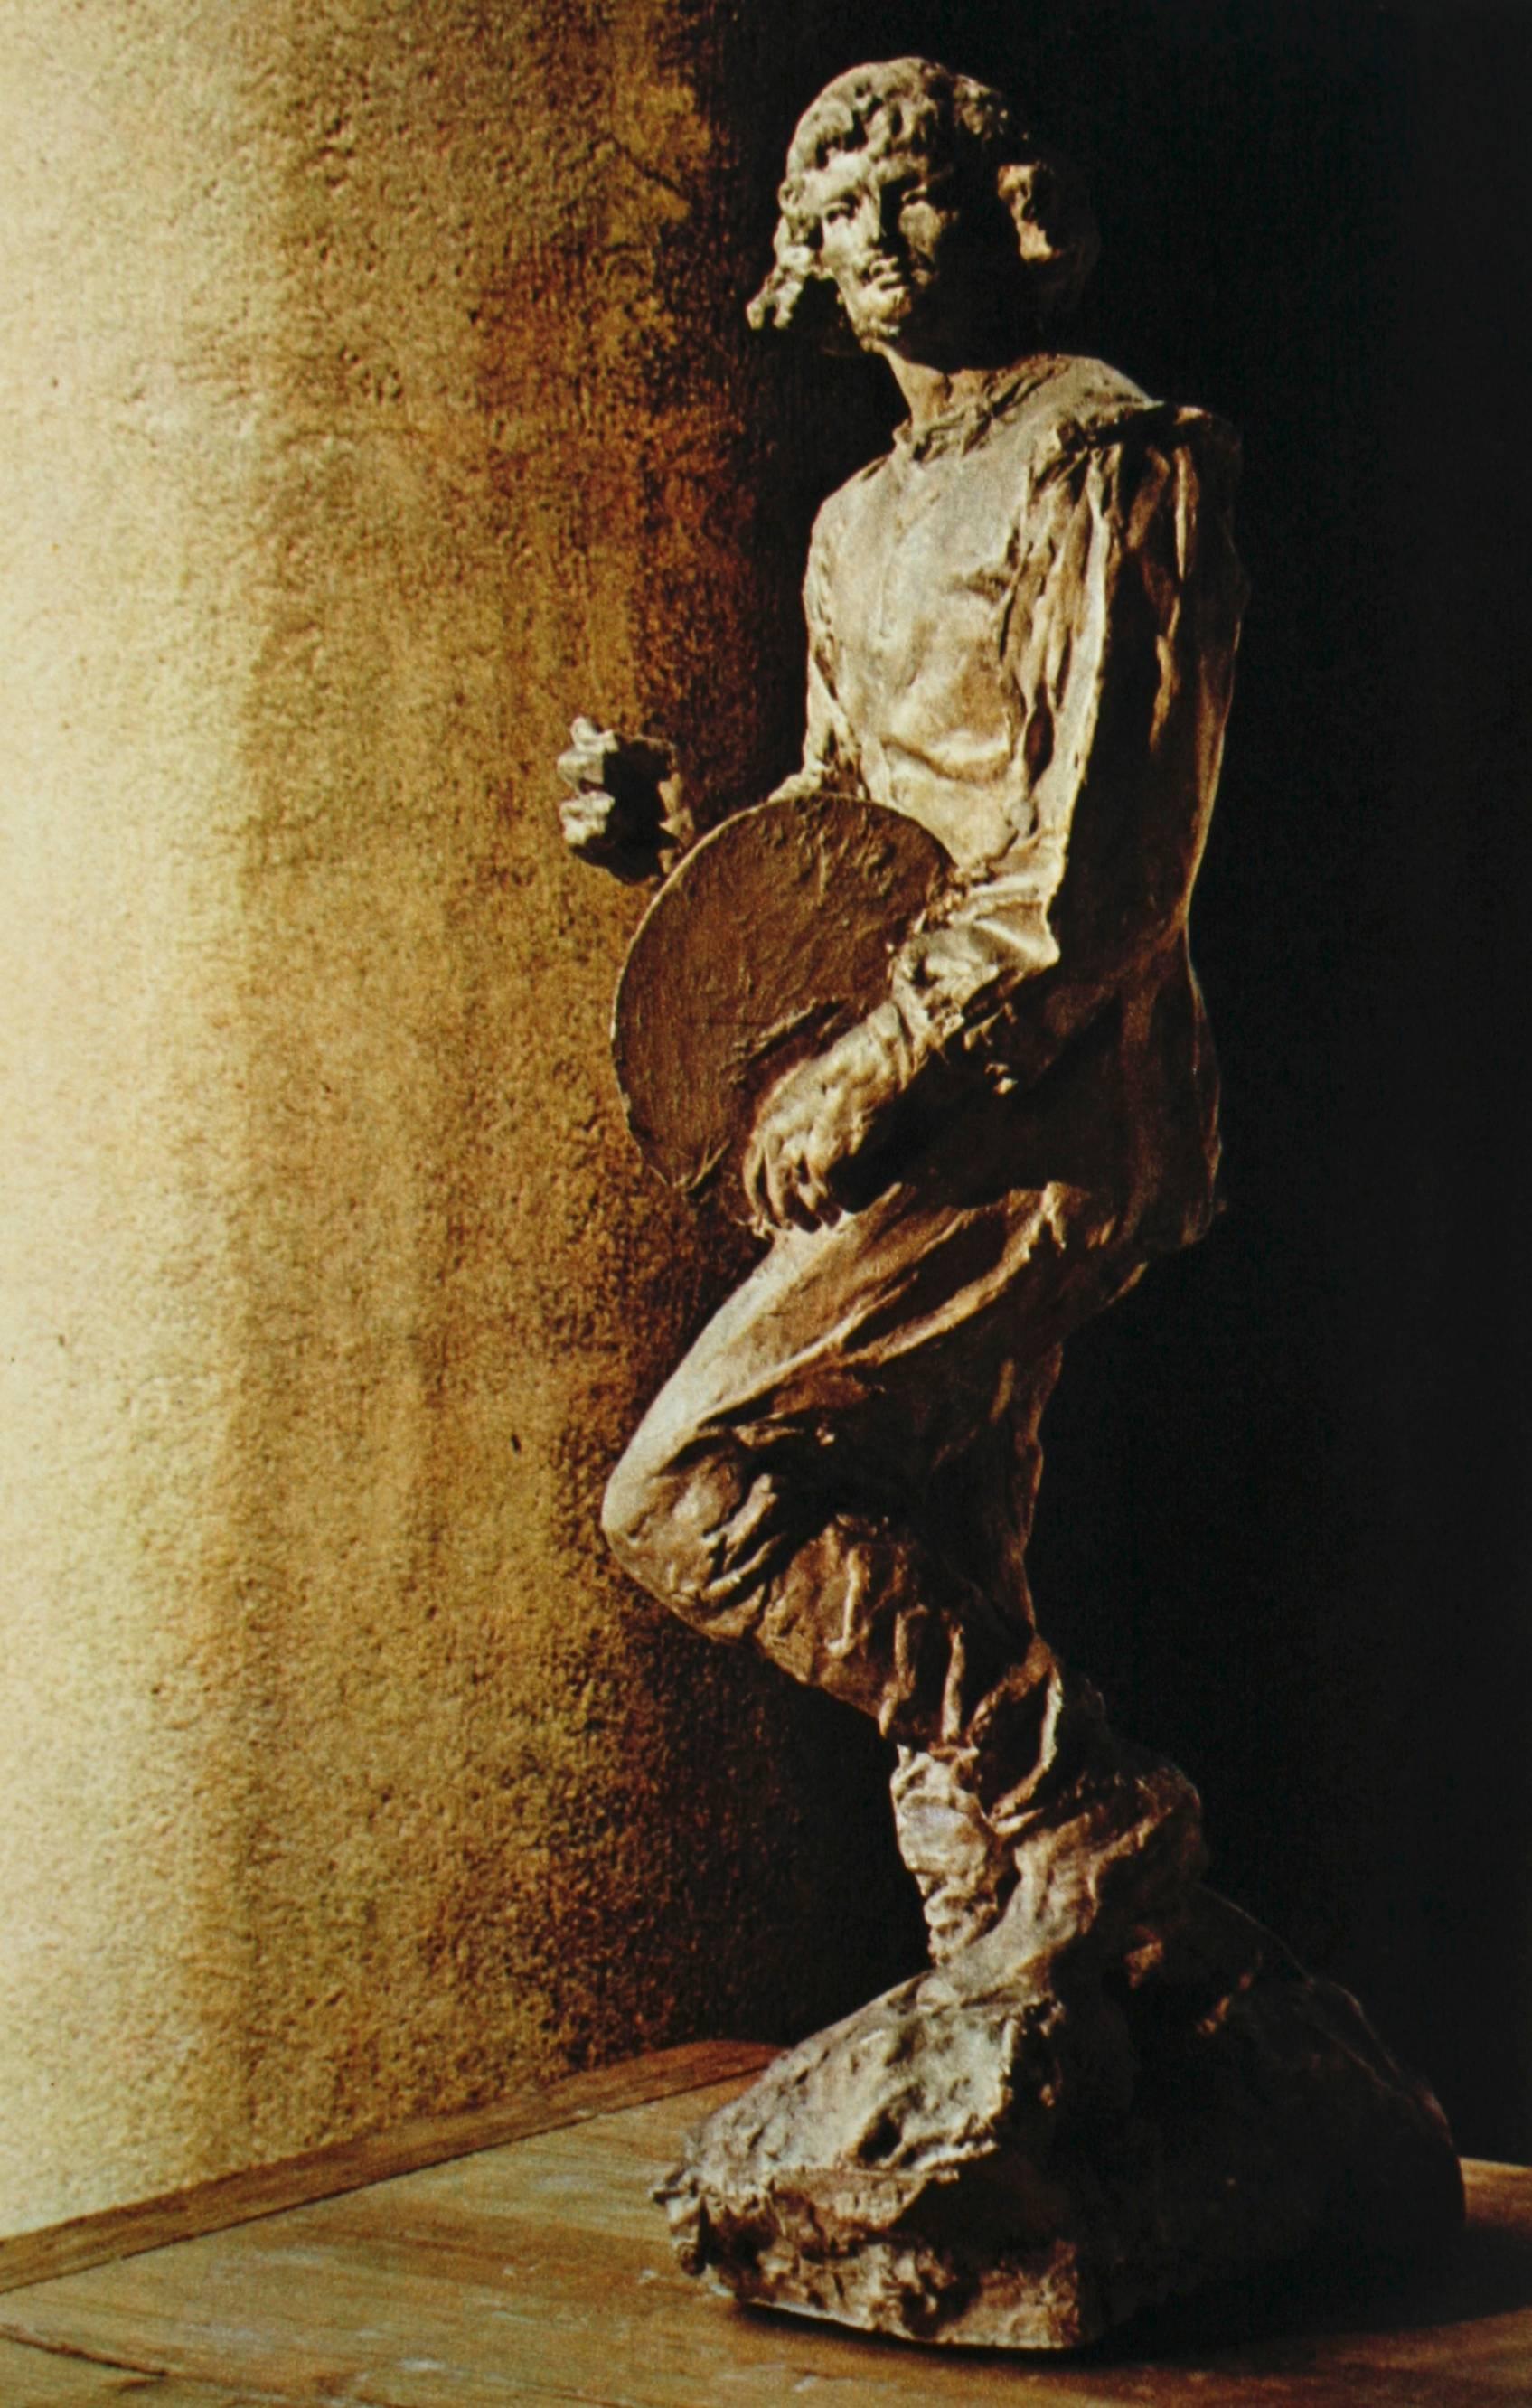 Rodin by Robert Descharnes and Jean-François Chabrun, First Edition 1